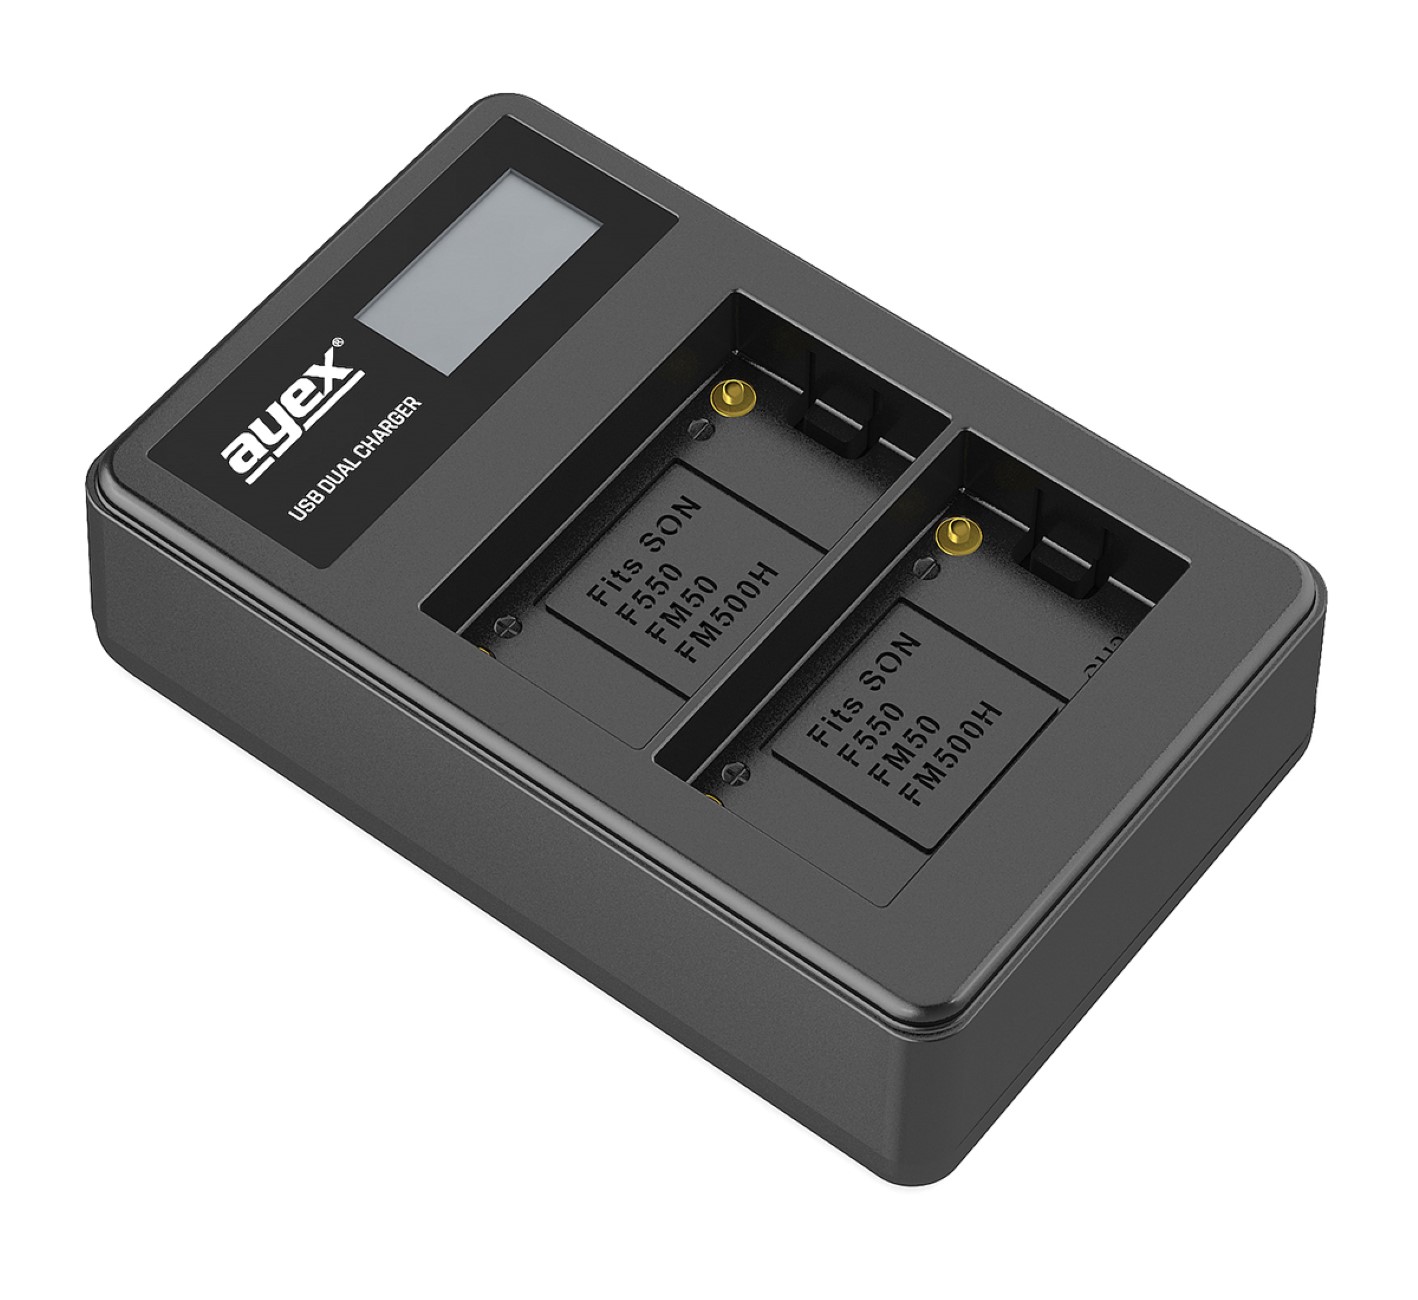 ayex USB Dual Ladegerät für Sony NP-F550 NP-FM550H NP-FM50 Akkus